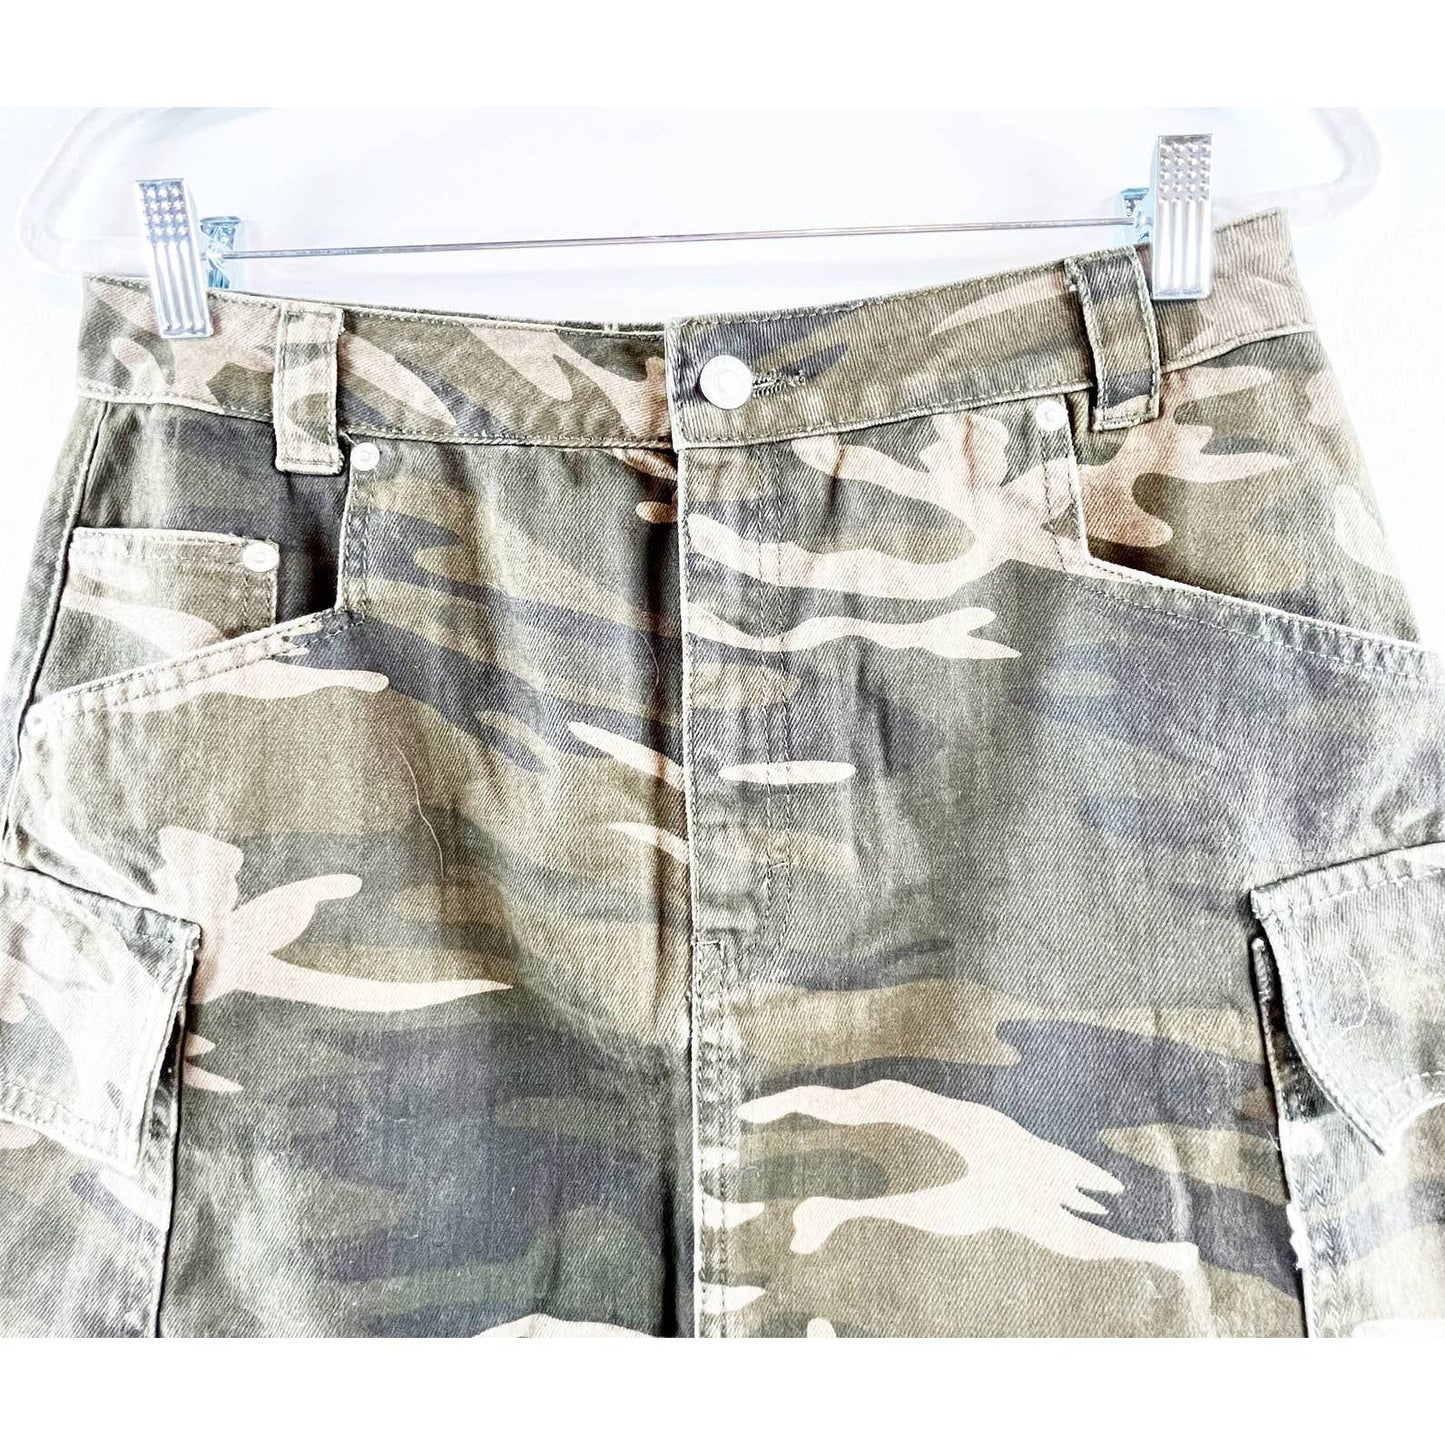 Topshop Camo Camouflage Military High Waisted Denim Mini Skirt Khaki Green 8